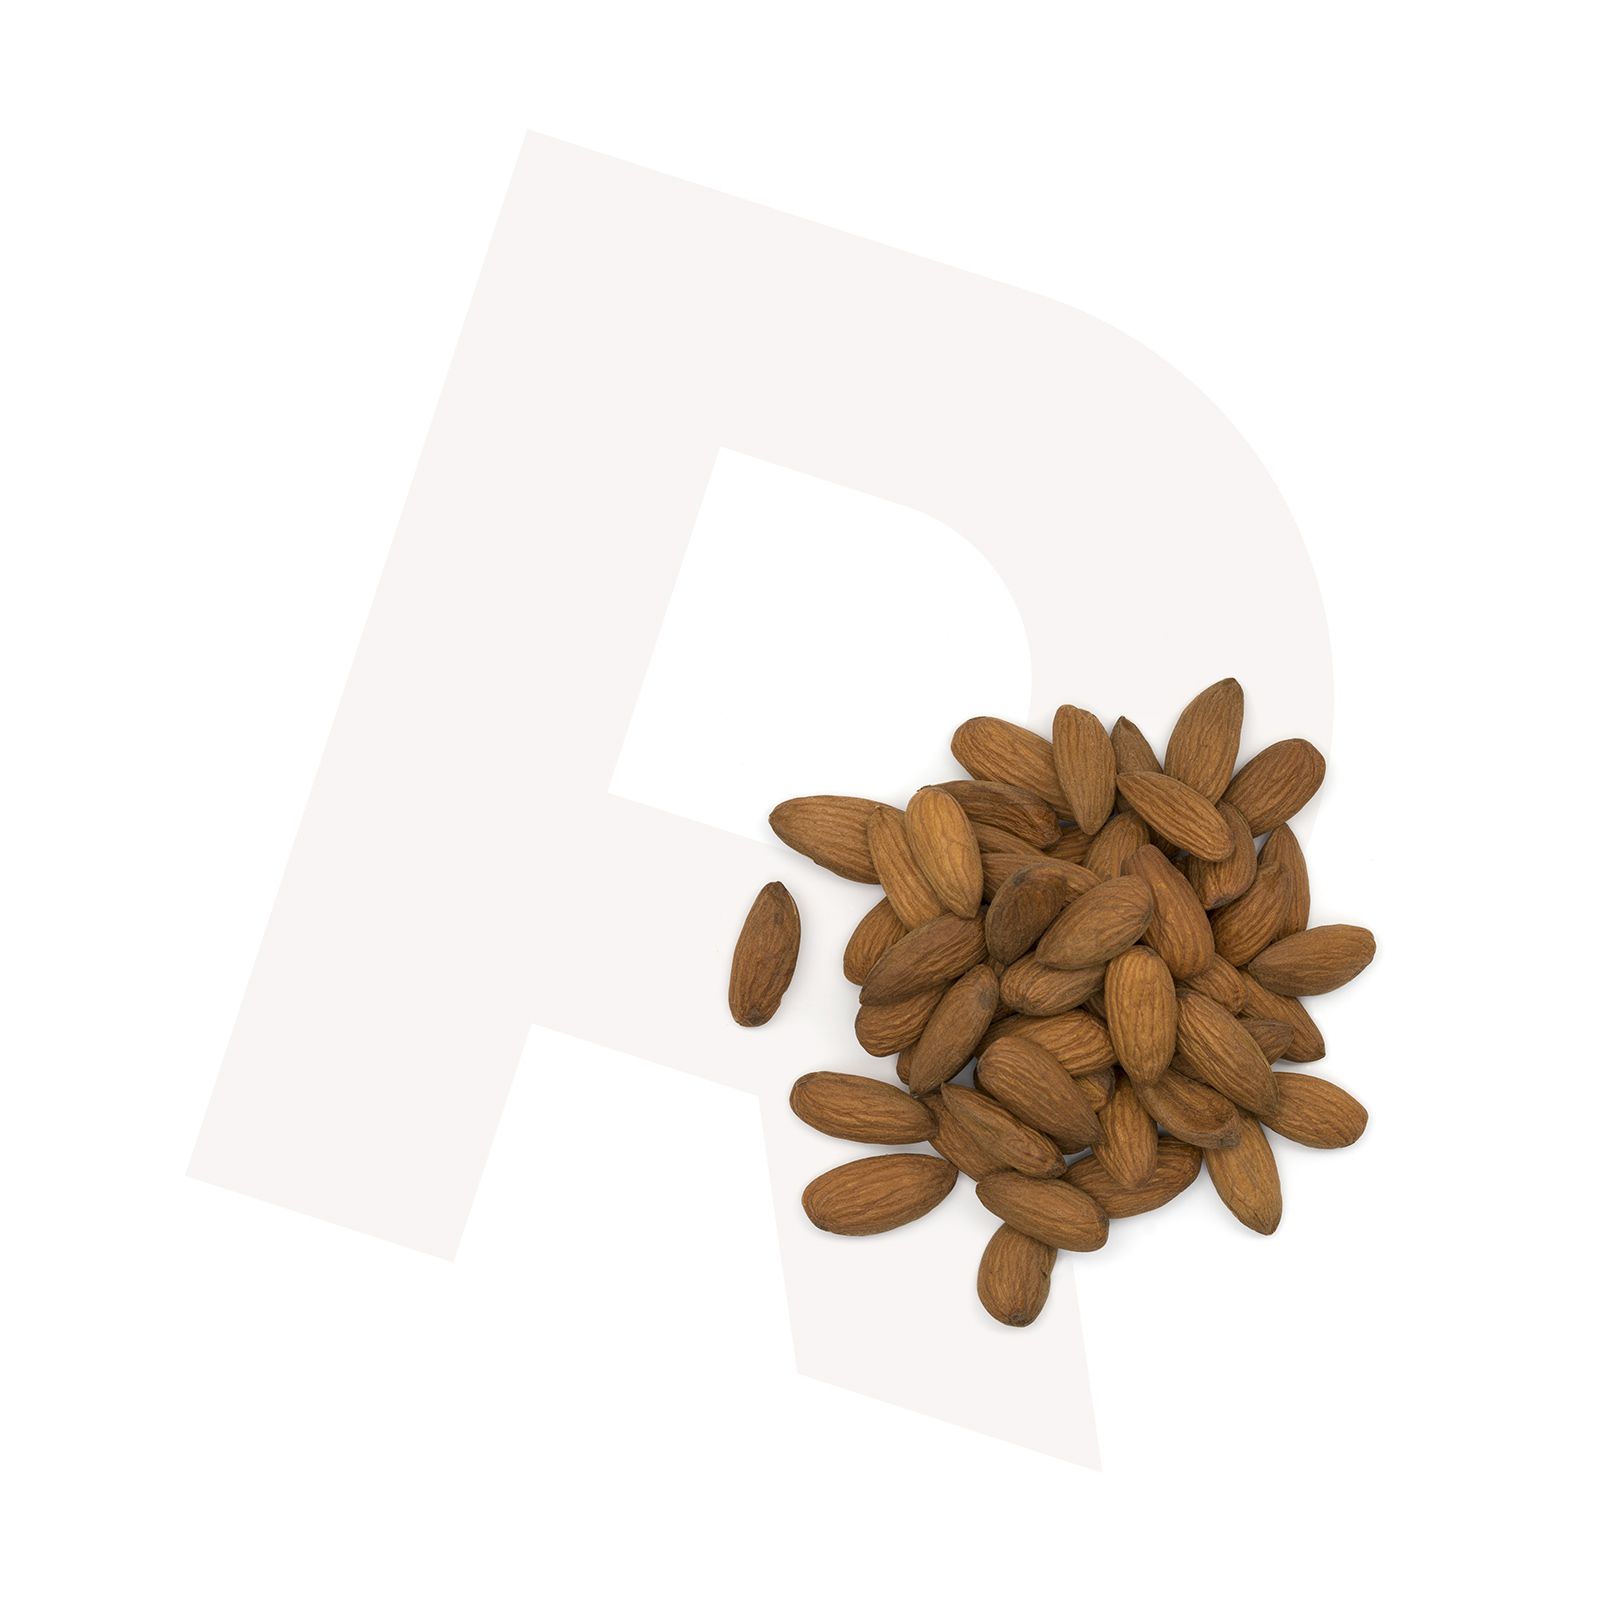 Almonds_Brown-almonds